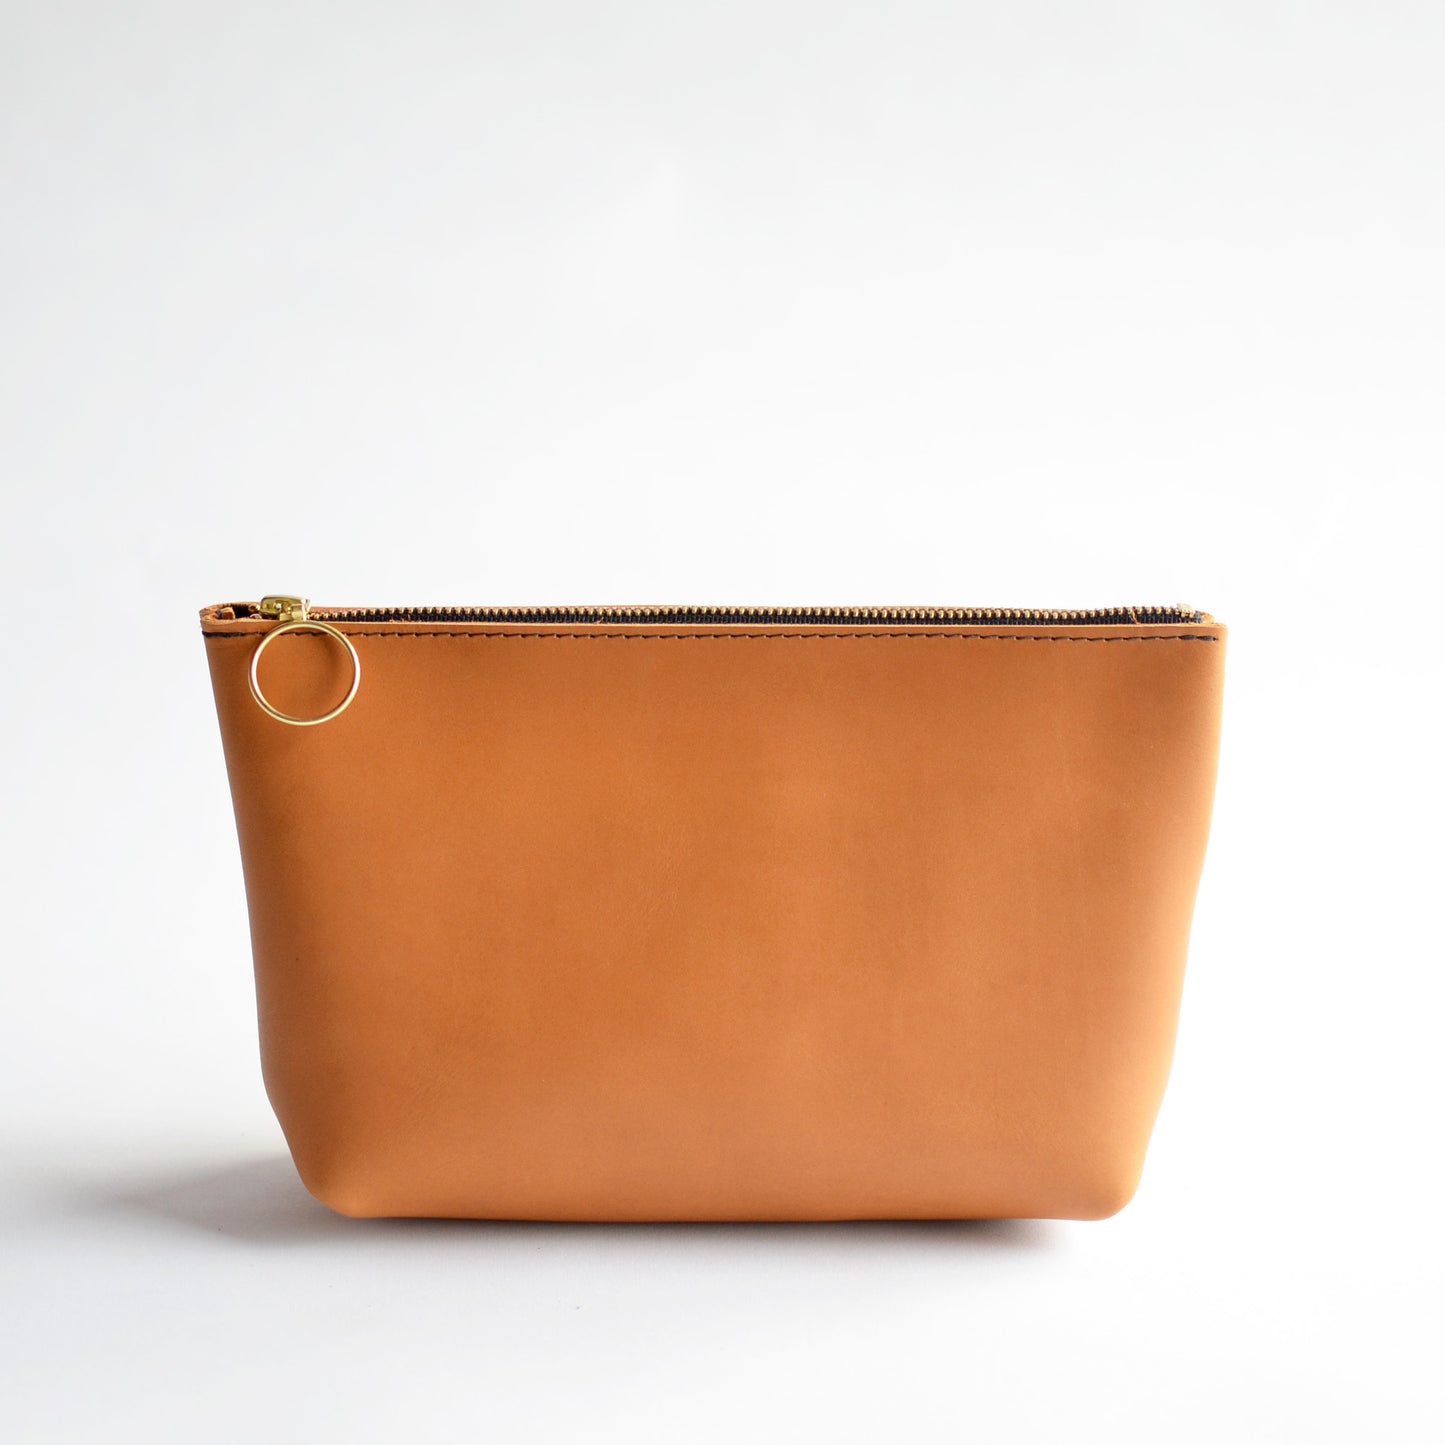 Wristlet Zipper Pouch - Honey Brown Leather